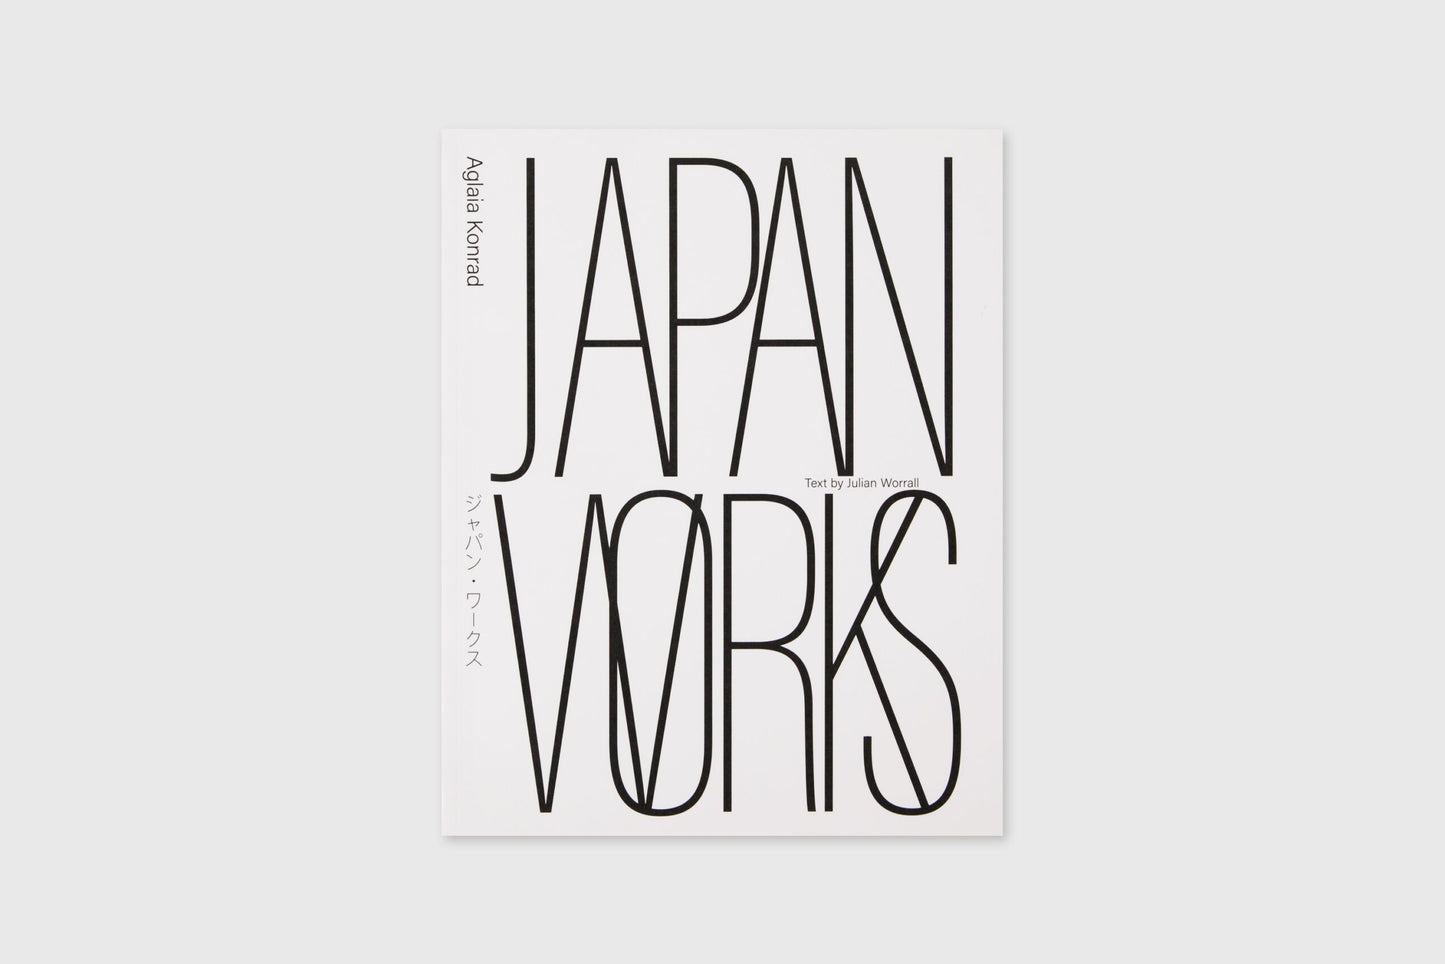 Japan Works